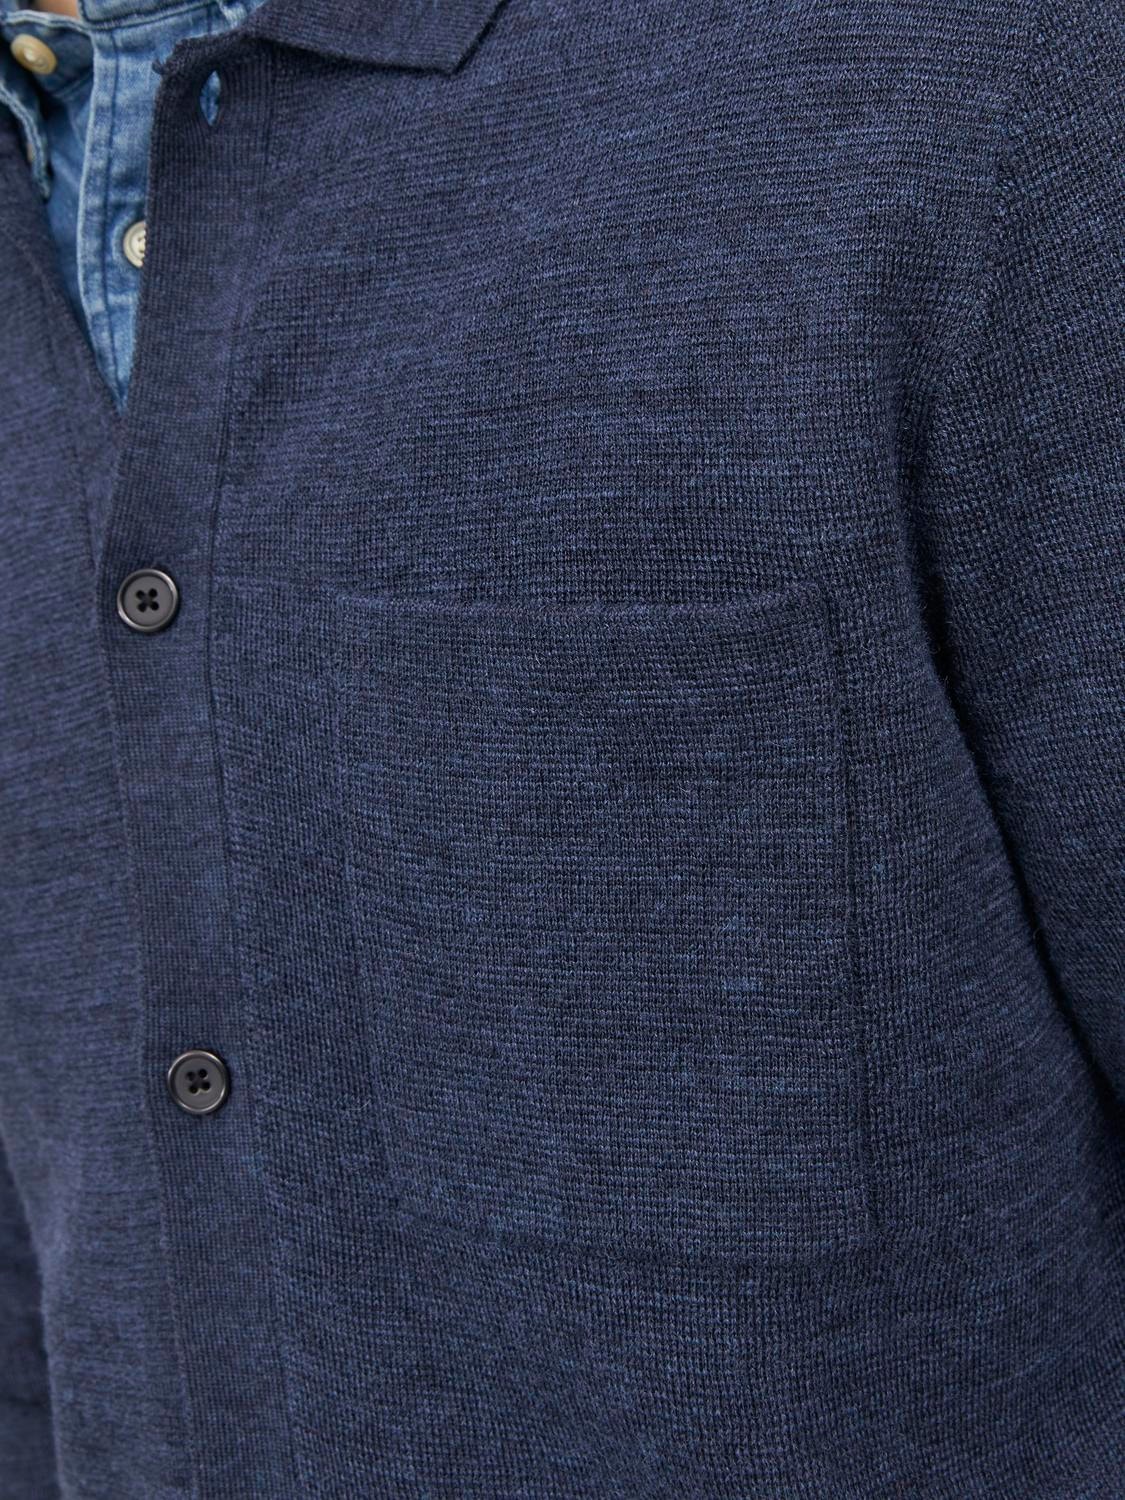 Jack & Jones Plain Knitted cardigan -Maritime Blue - 12238422